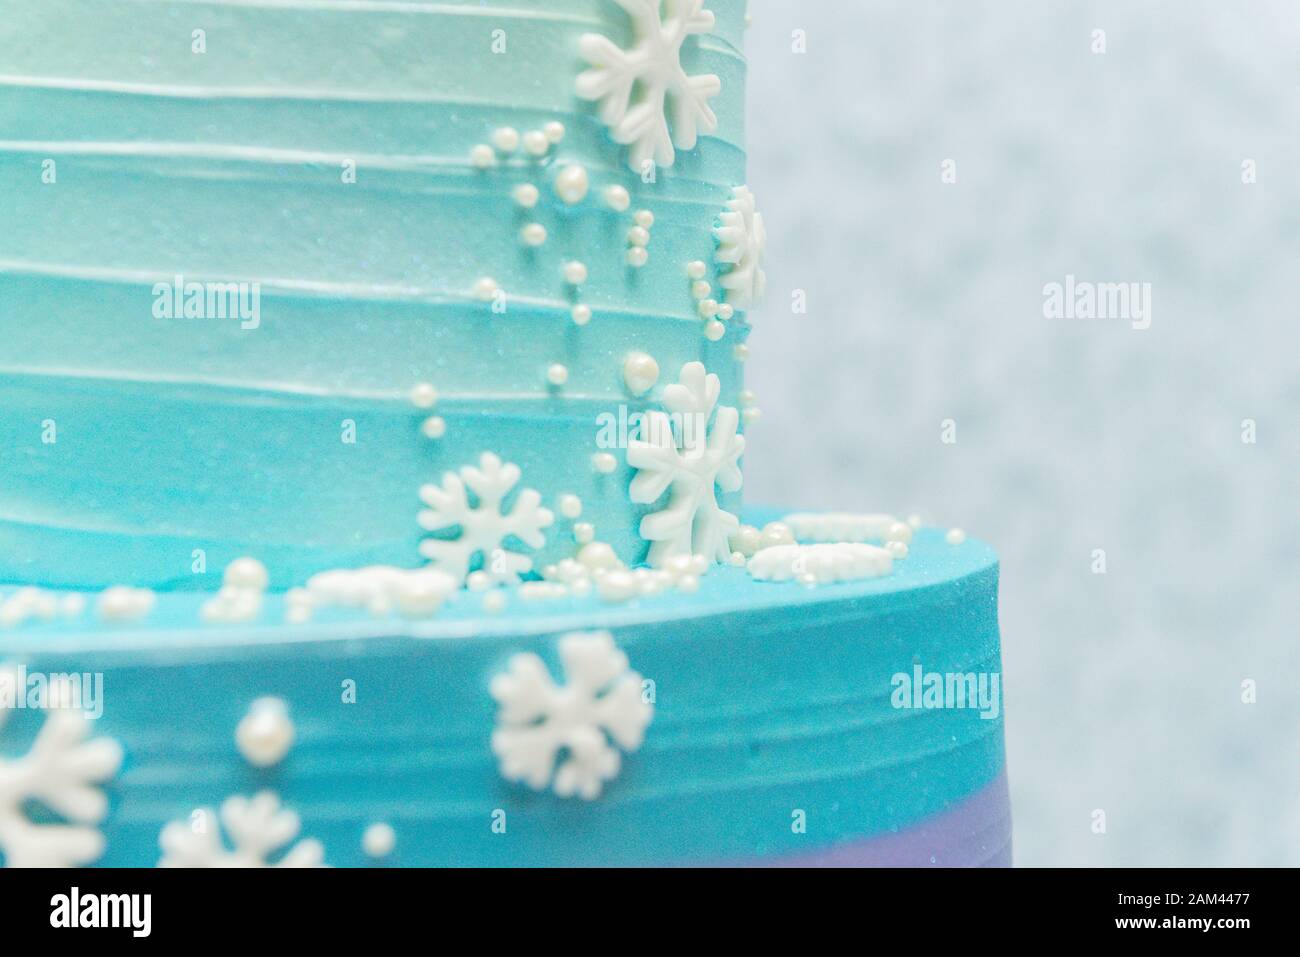 2 Tier Frozen Snowflake Cake - Supreme Bakery